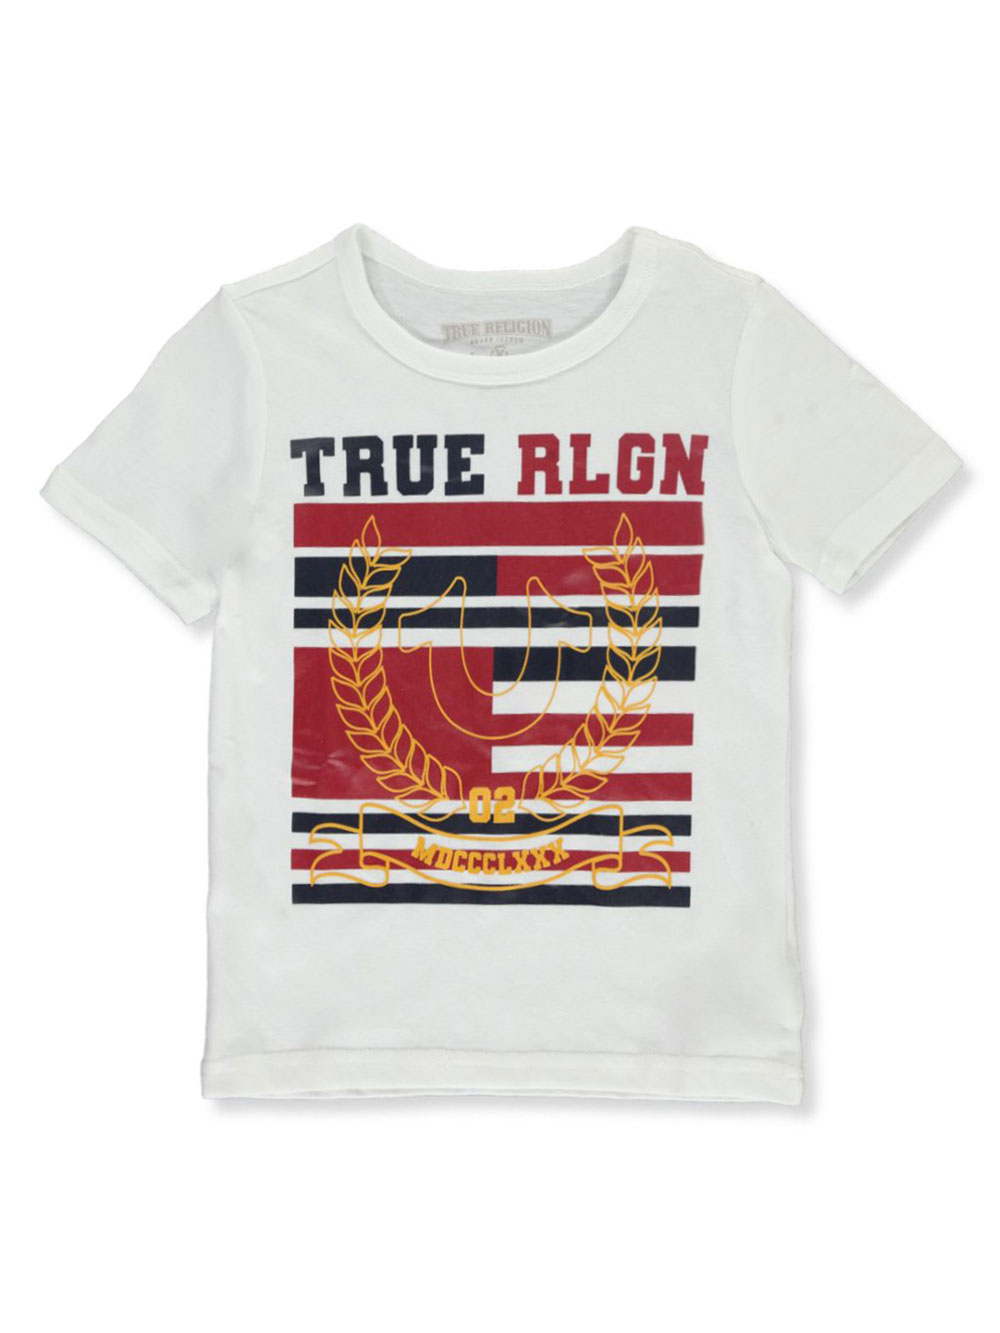 boys true religion t shirt